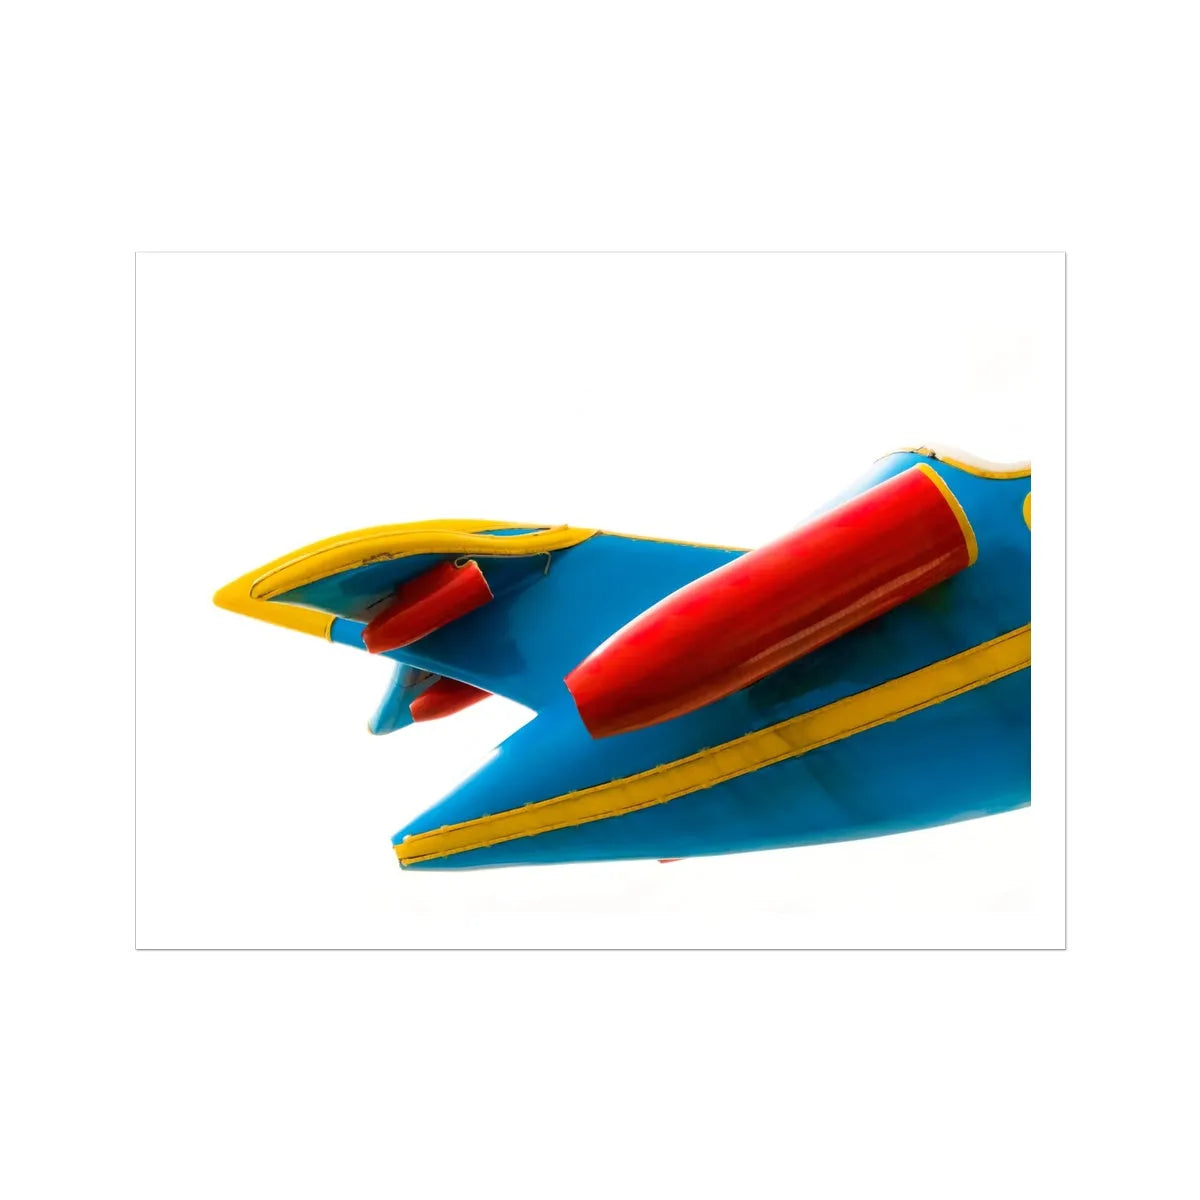 Flying Higher Art Print - Amusement Park Airplane - 40’x30’ - Posters Prints & Visual Artwork - Aesthetic Art